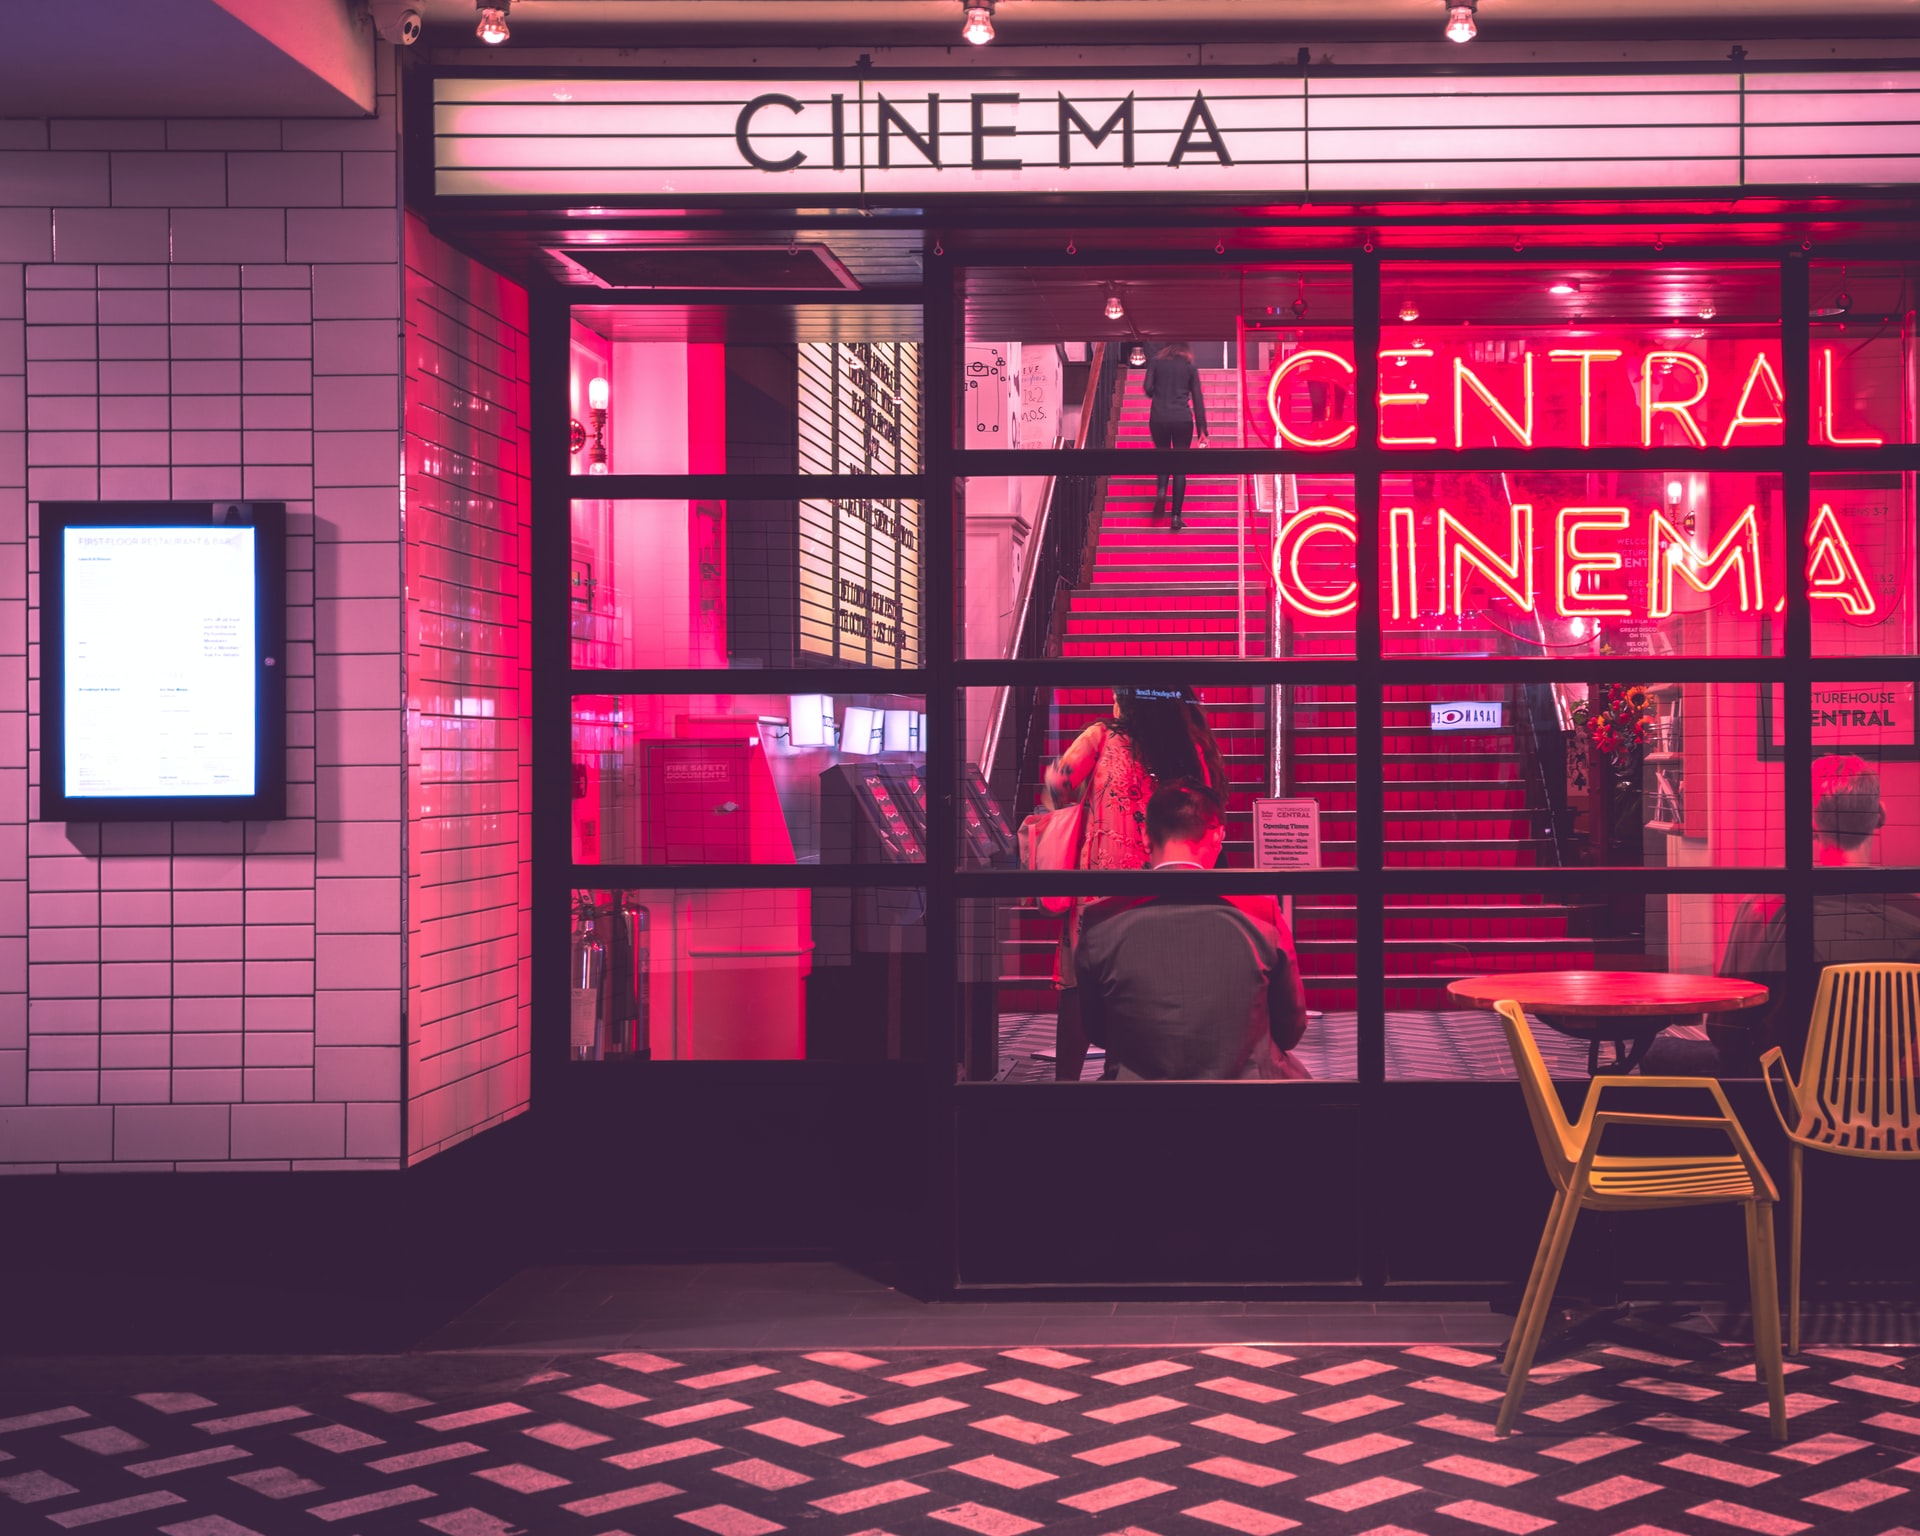 Image of a cinema.